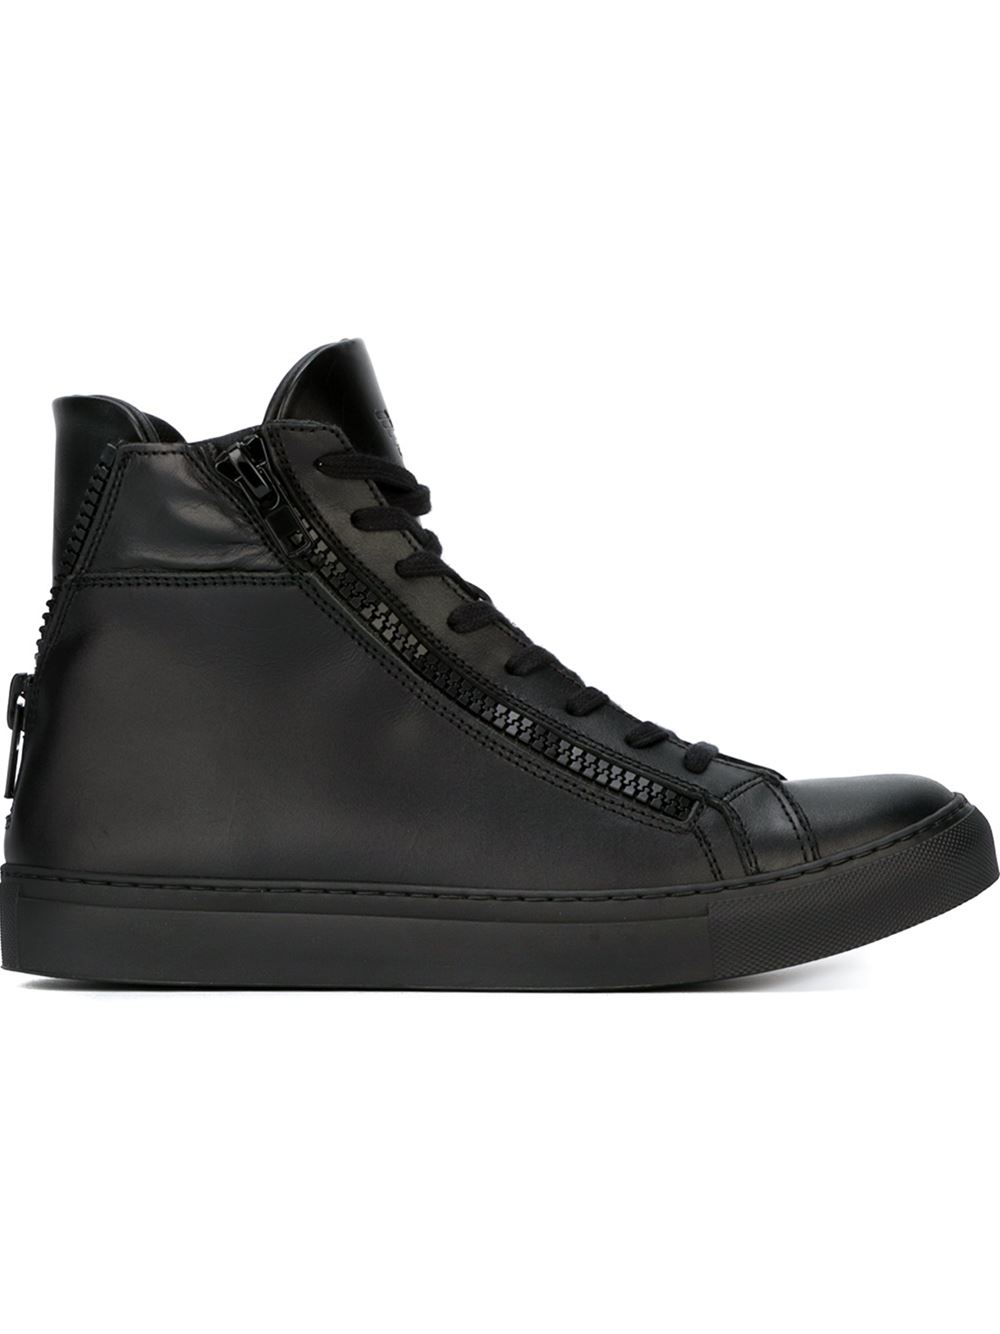 Lyst - Emporio Armani Zip-Detail High-Top Sneakers in Black for Men